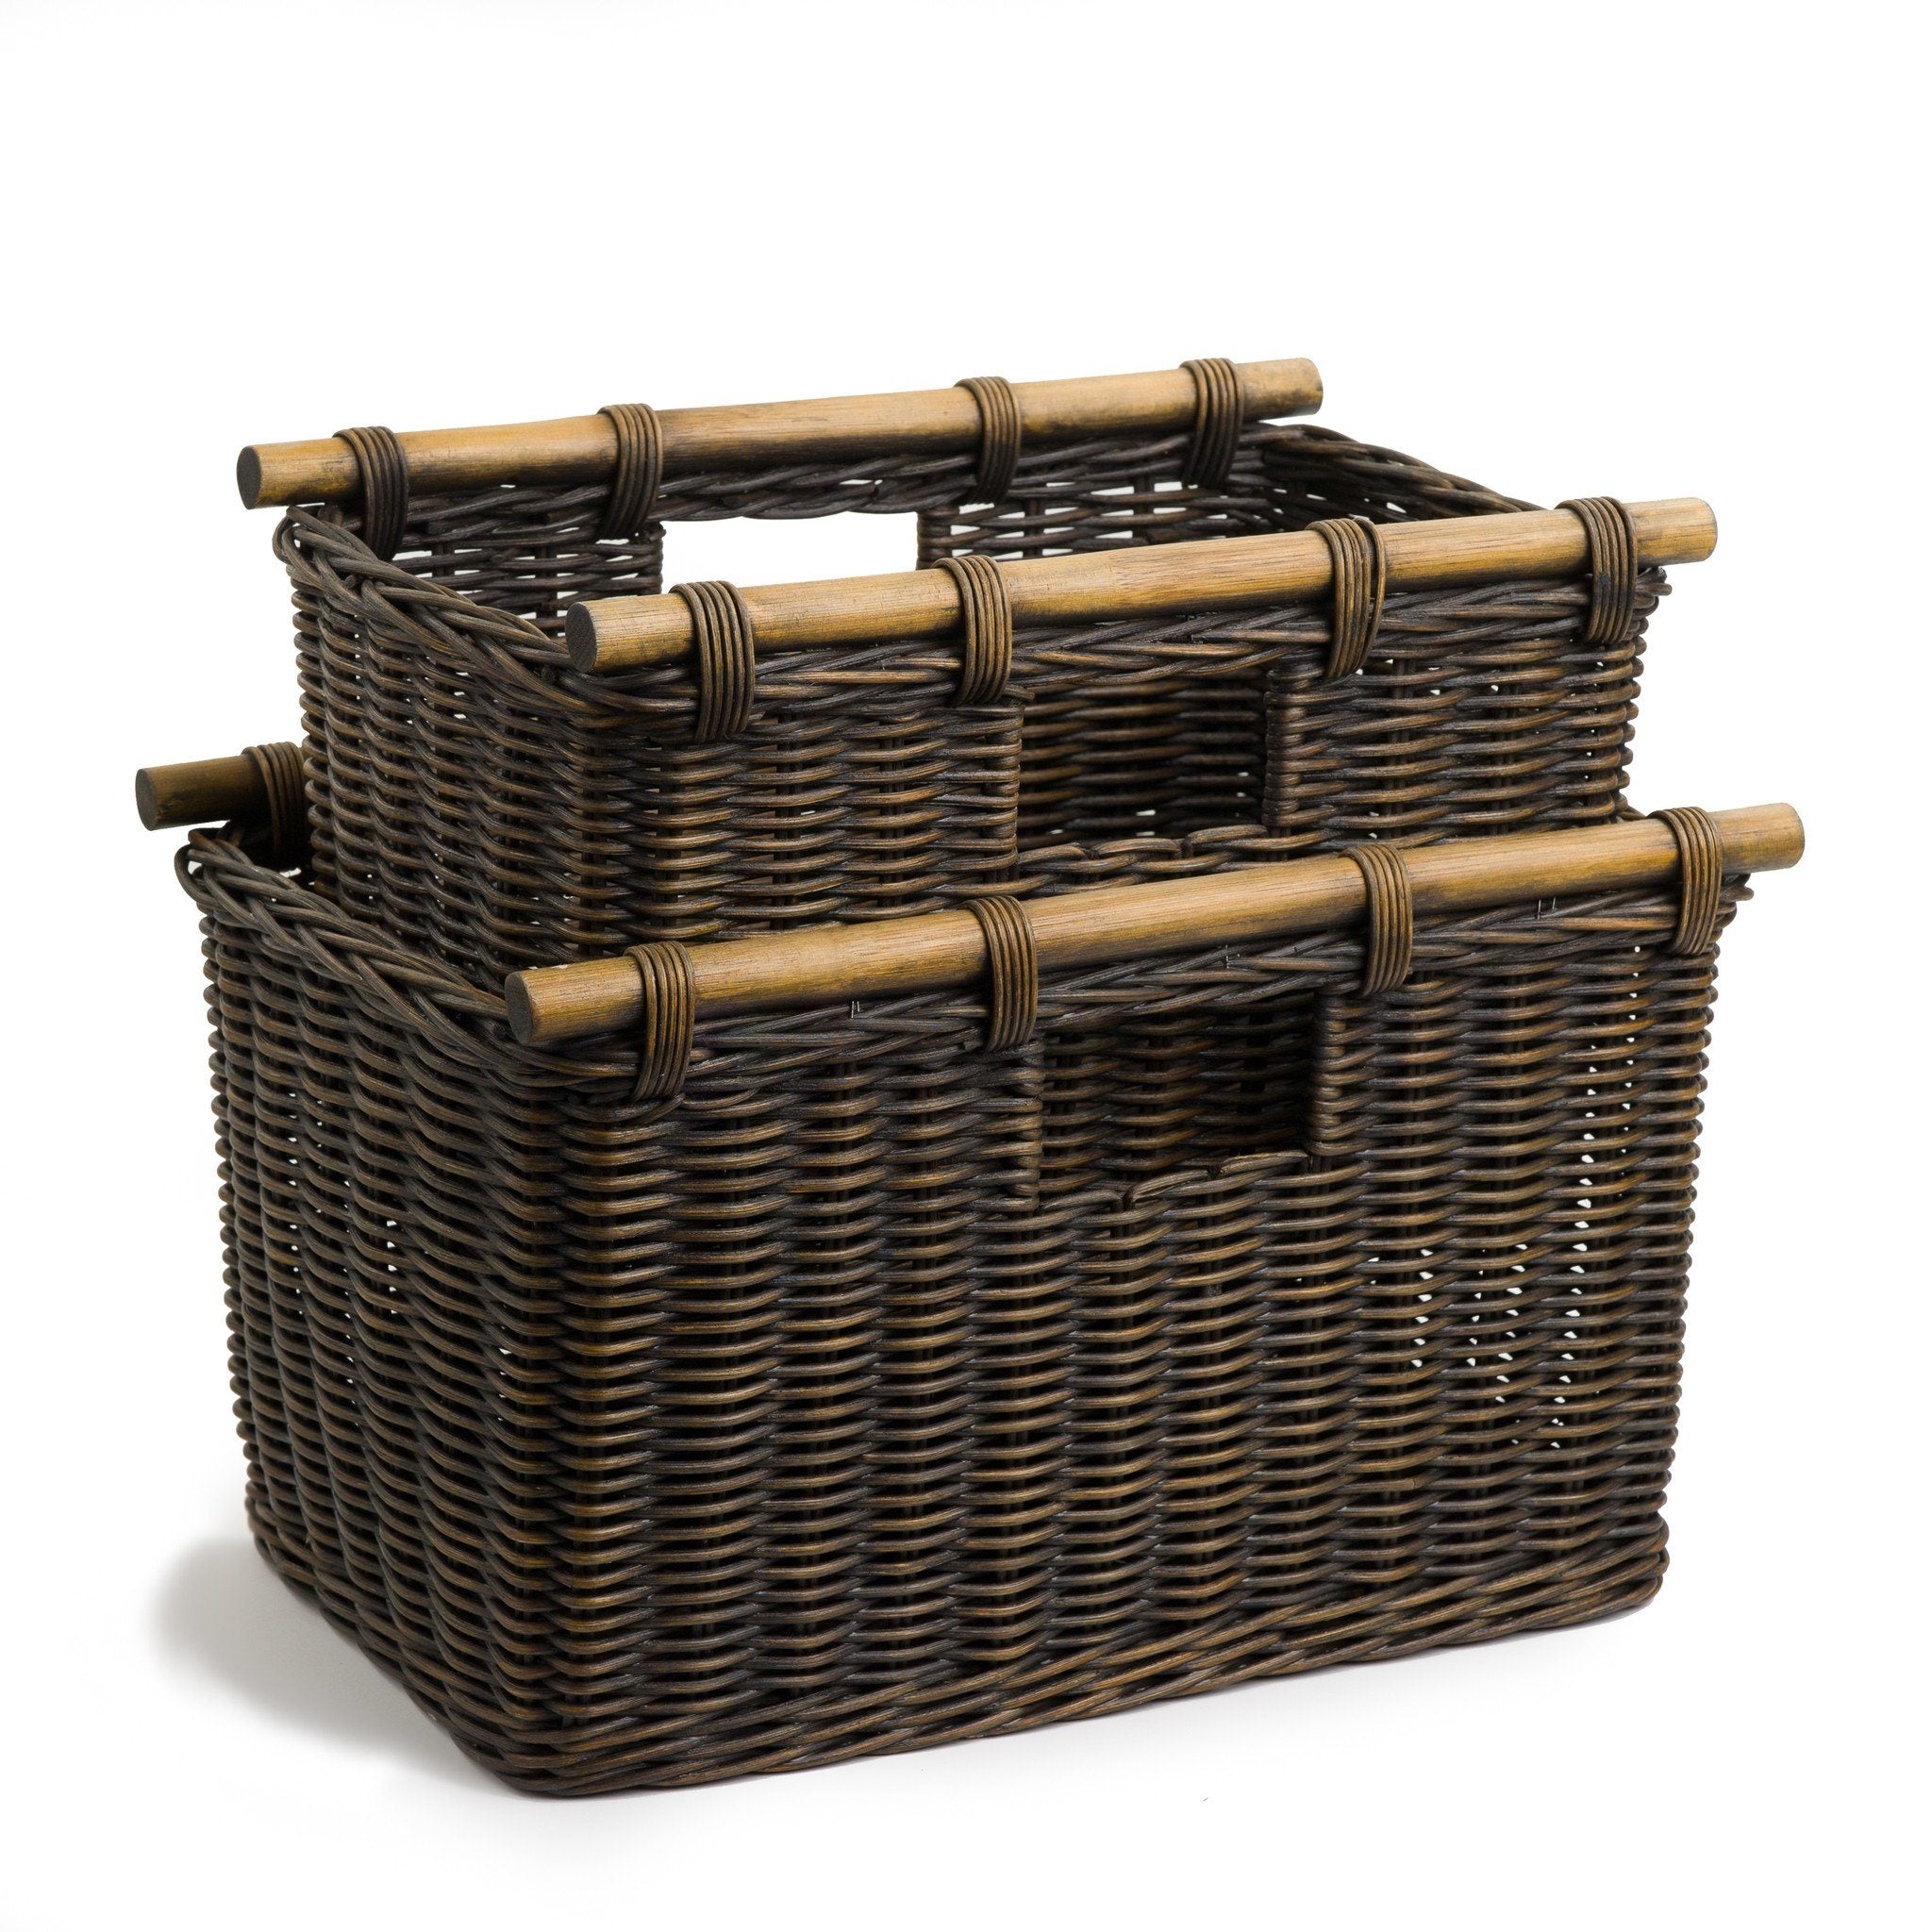 Tall Narrow Wicker Storage Basket - Antique Walnut Brown - Medium